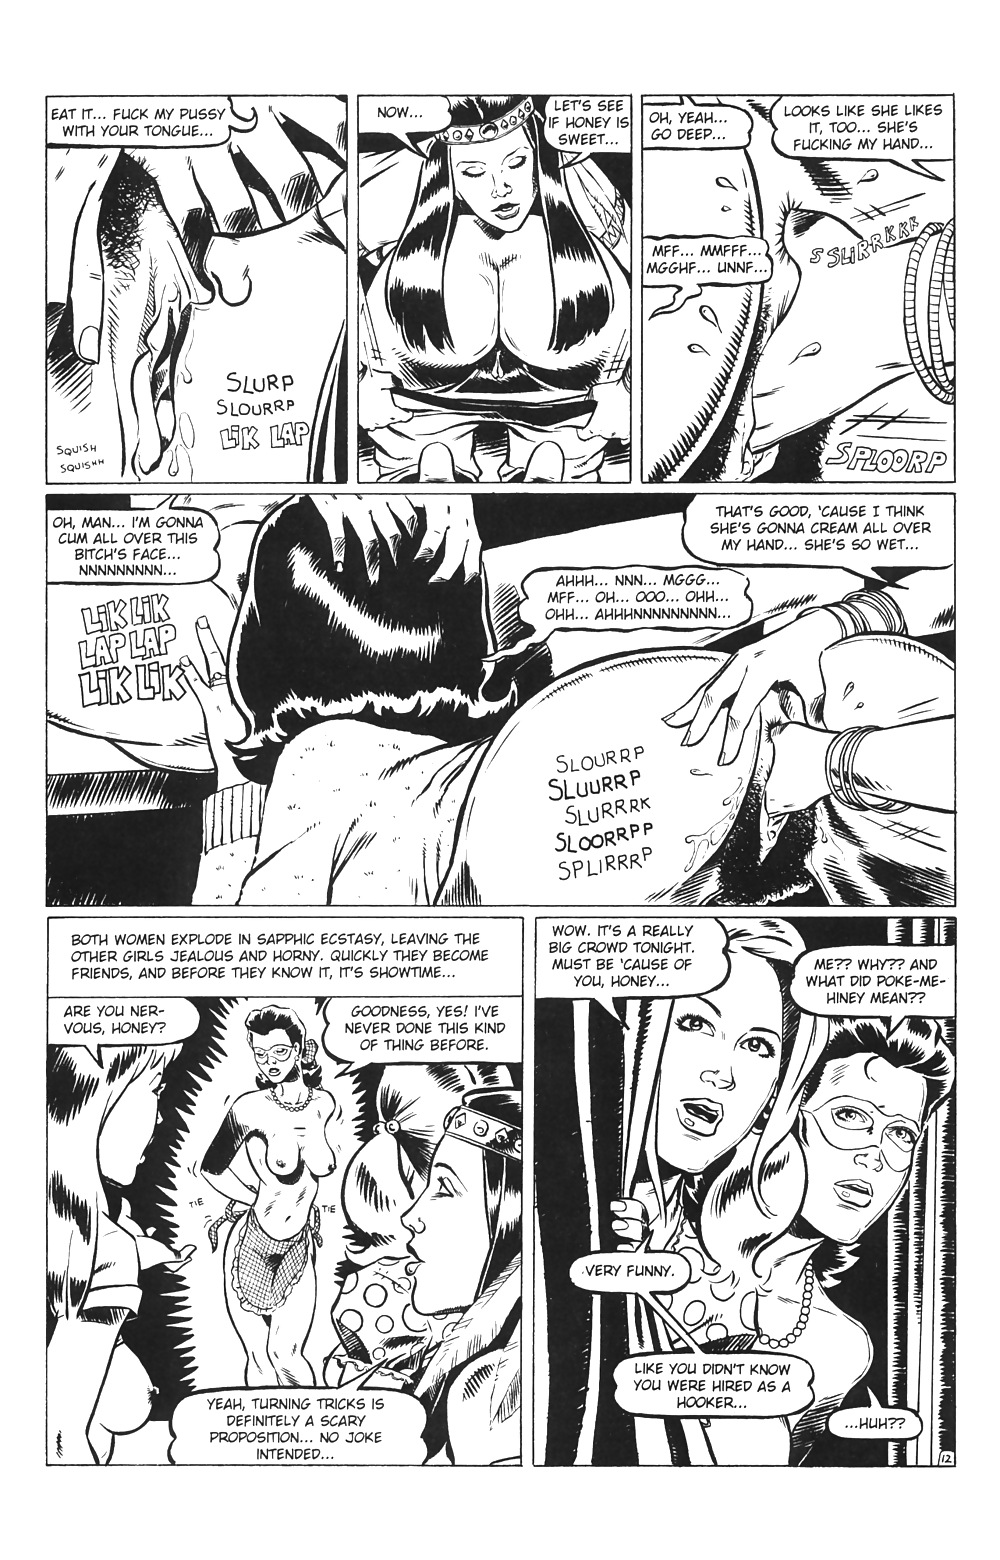 Casalinghe in gioco #03 - eros comics by rebecca - ottobre 2001
 #25713999